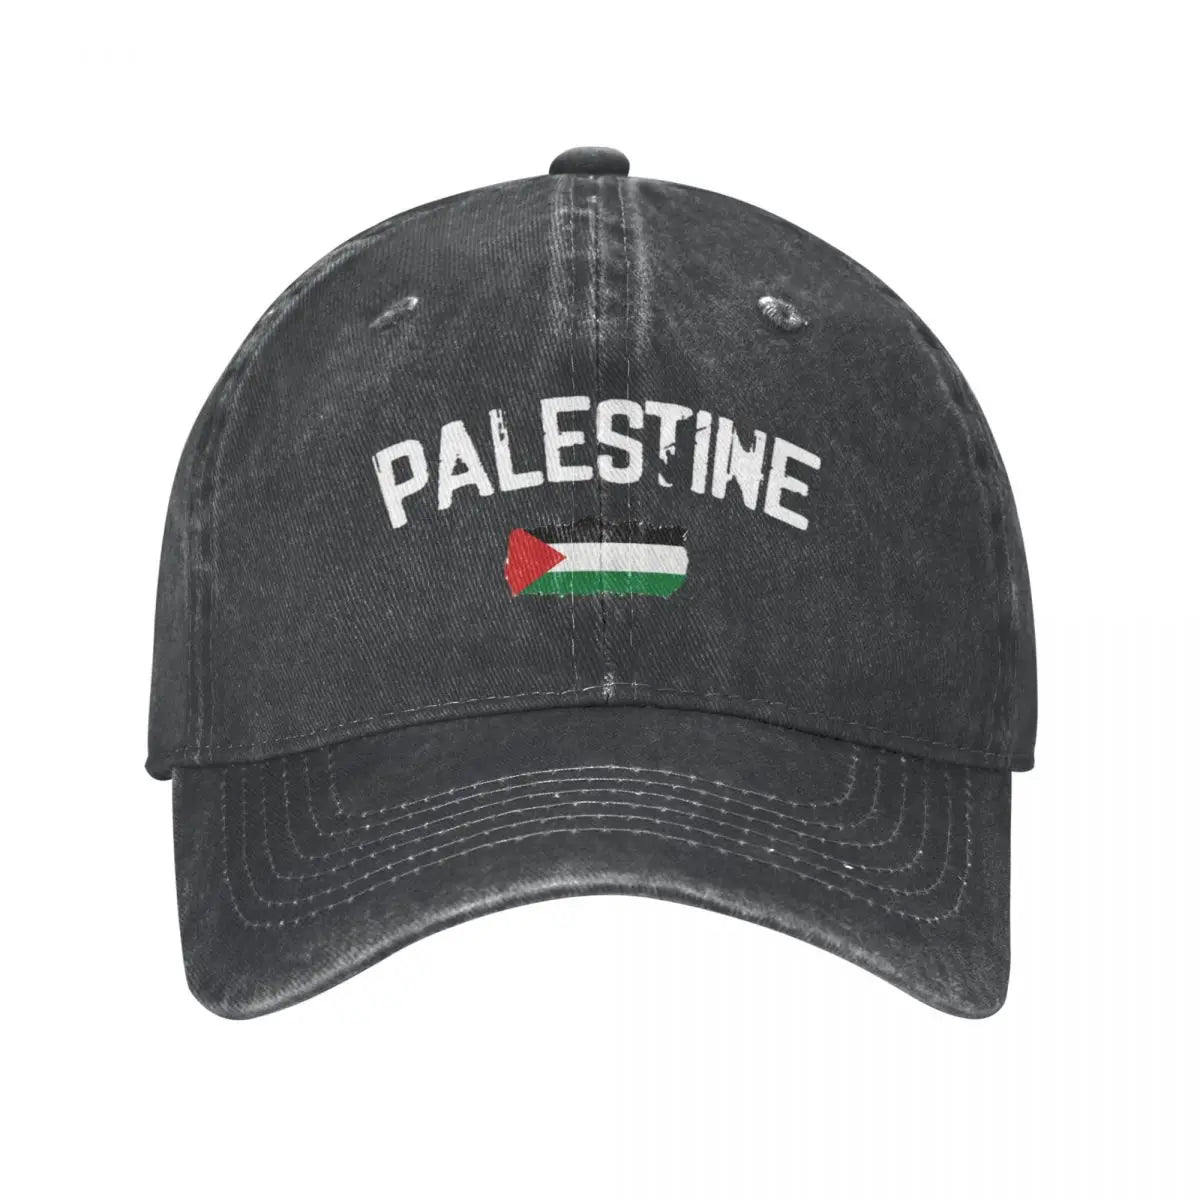 Casquette Palestine achat